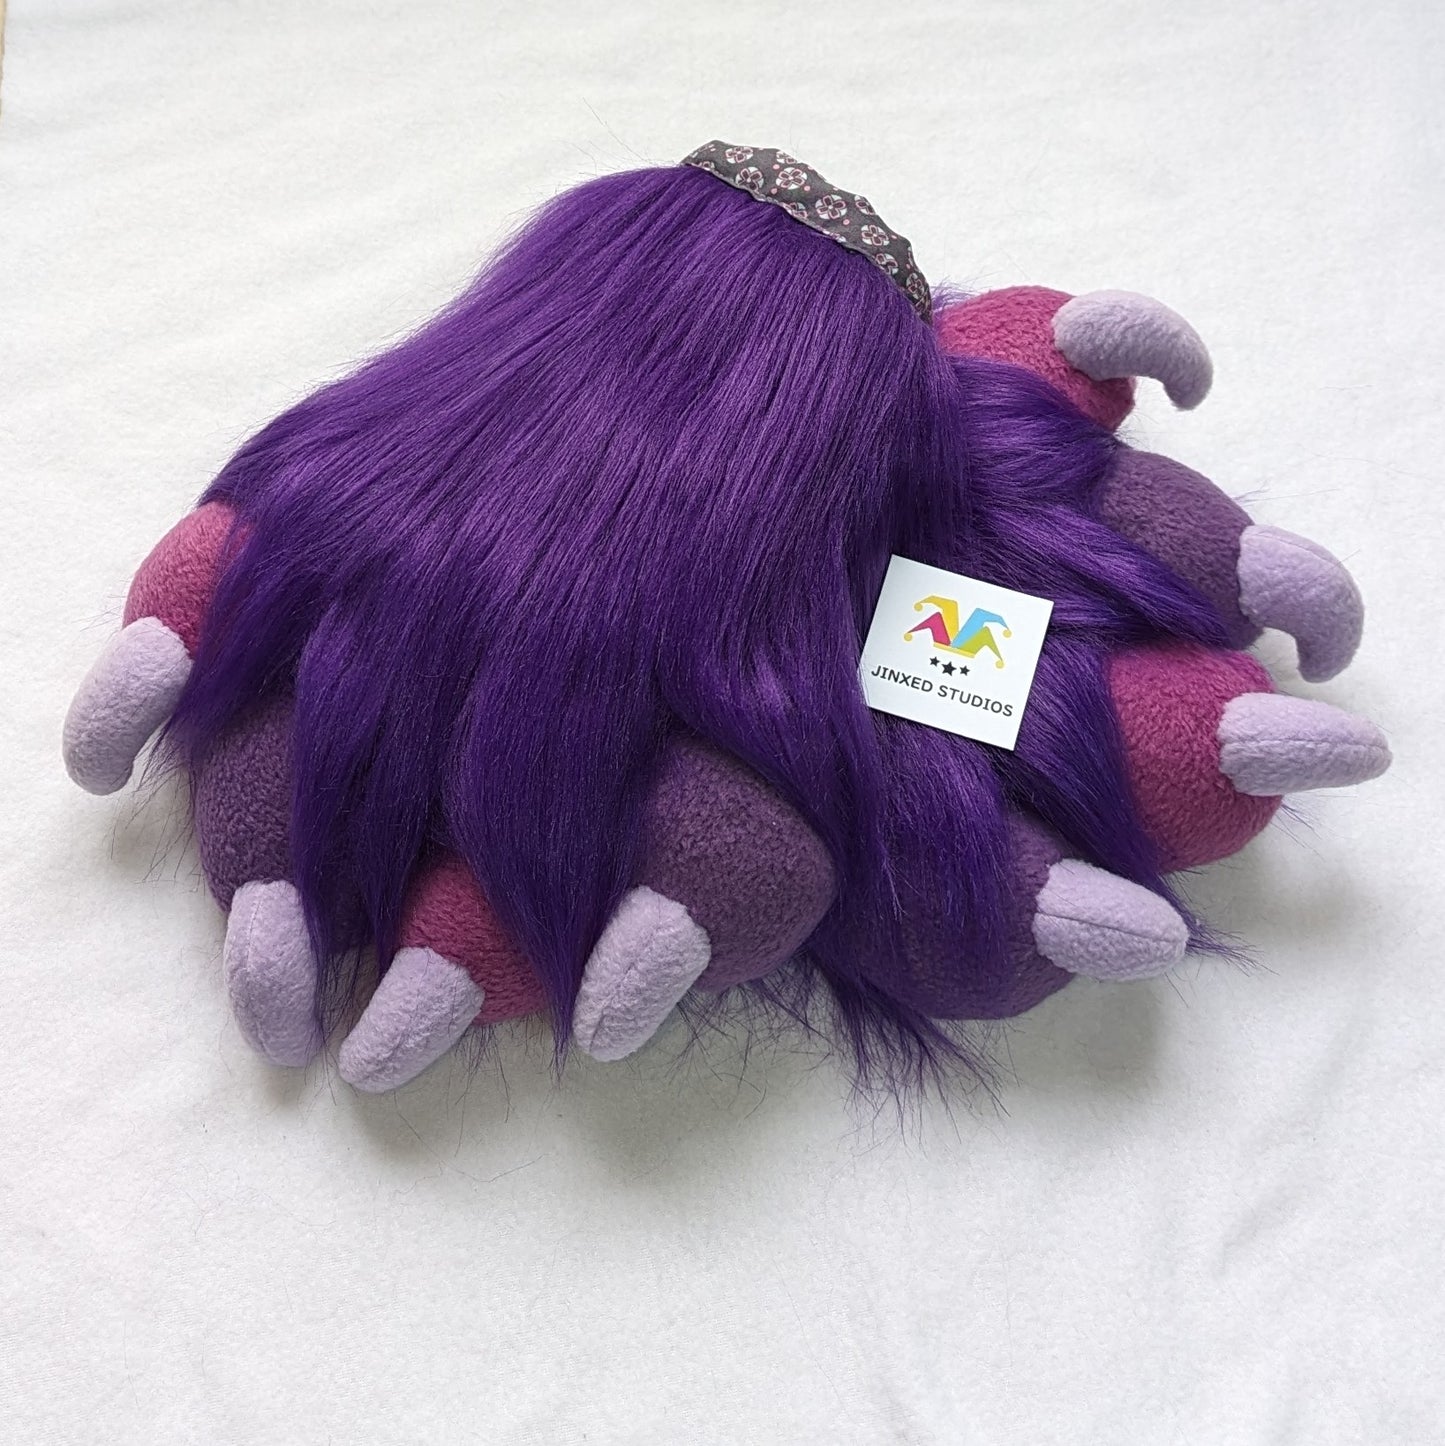 Hand Paws "Gorilla purple" Special Edition!